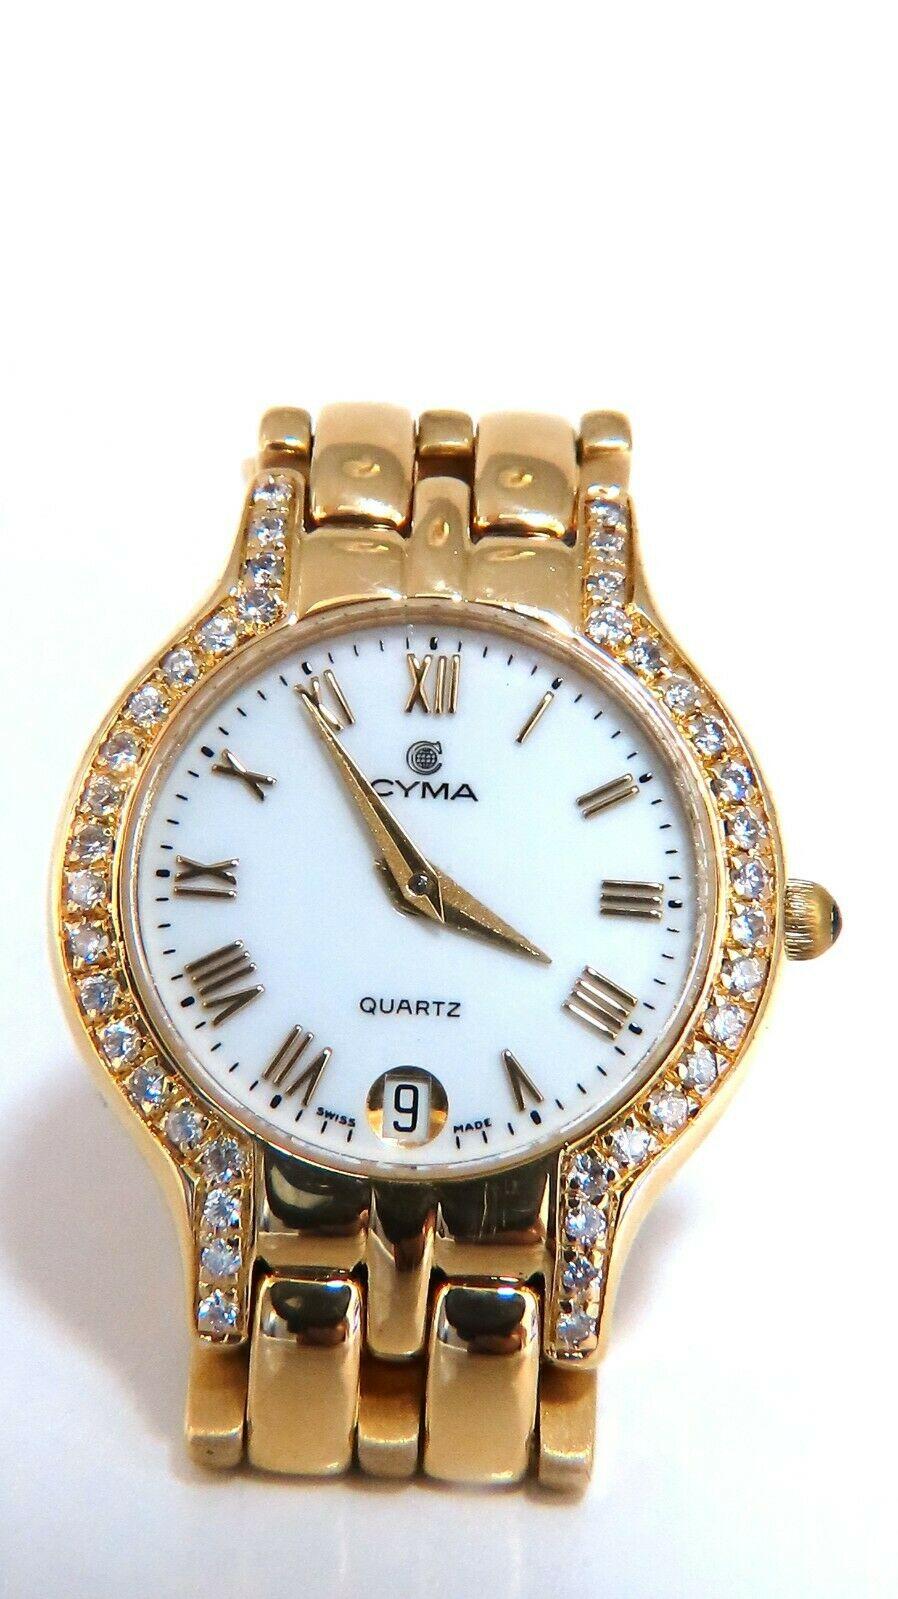 Uncut Cyma Ladies Gold Diamond Watch 14 Karat For Sale